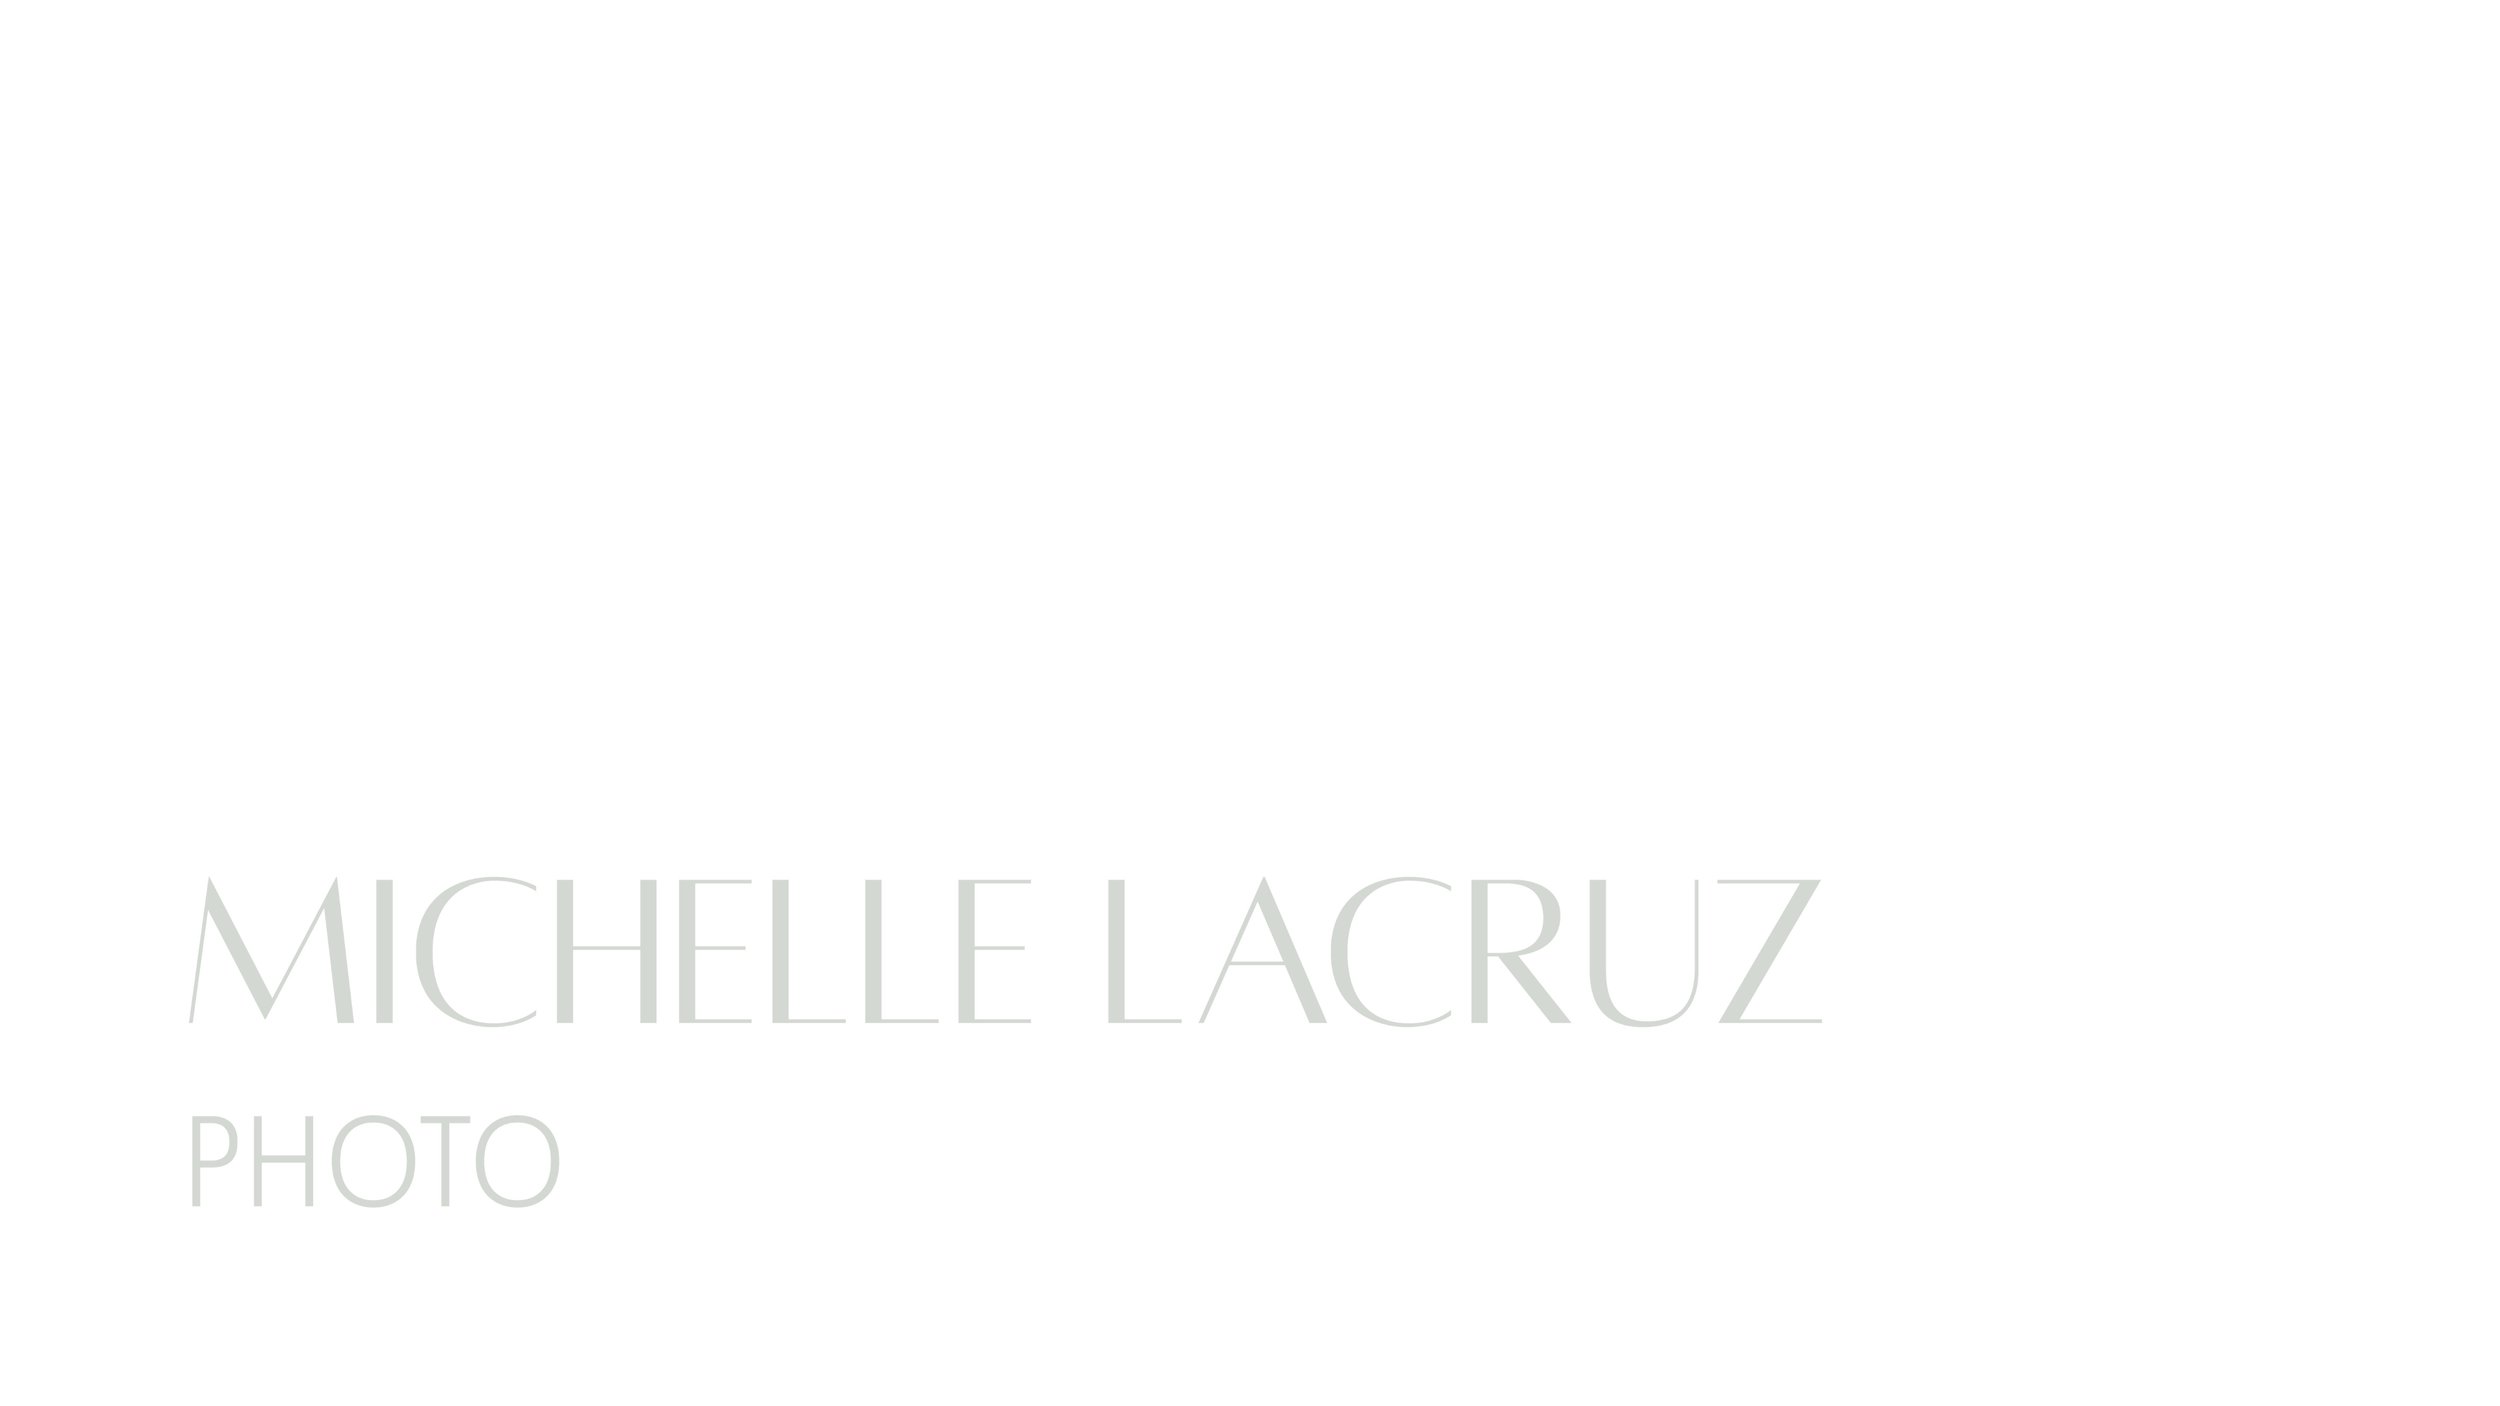 Michelle LaCruz 2023 Logo.JPG